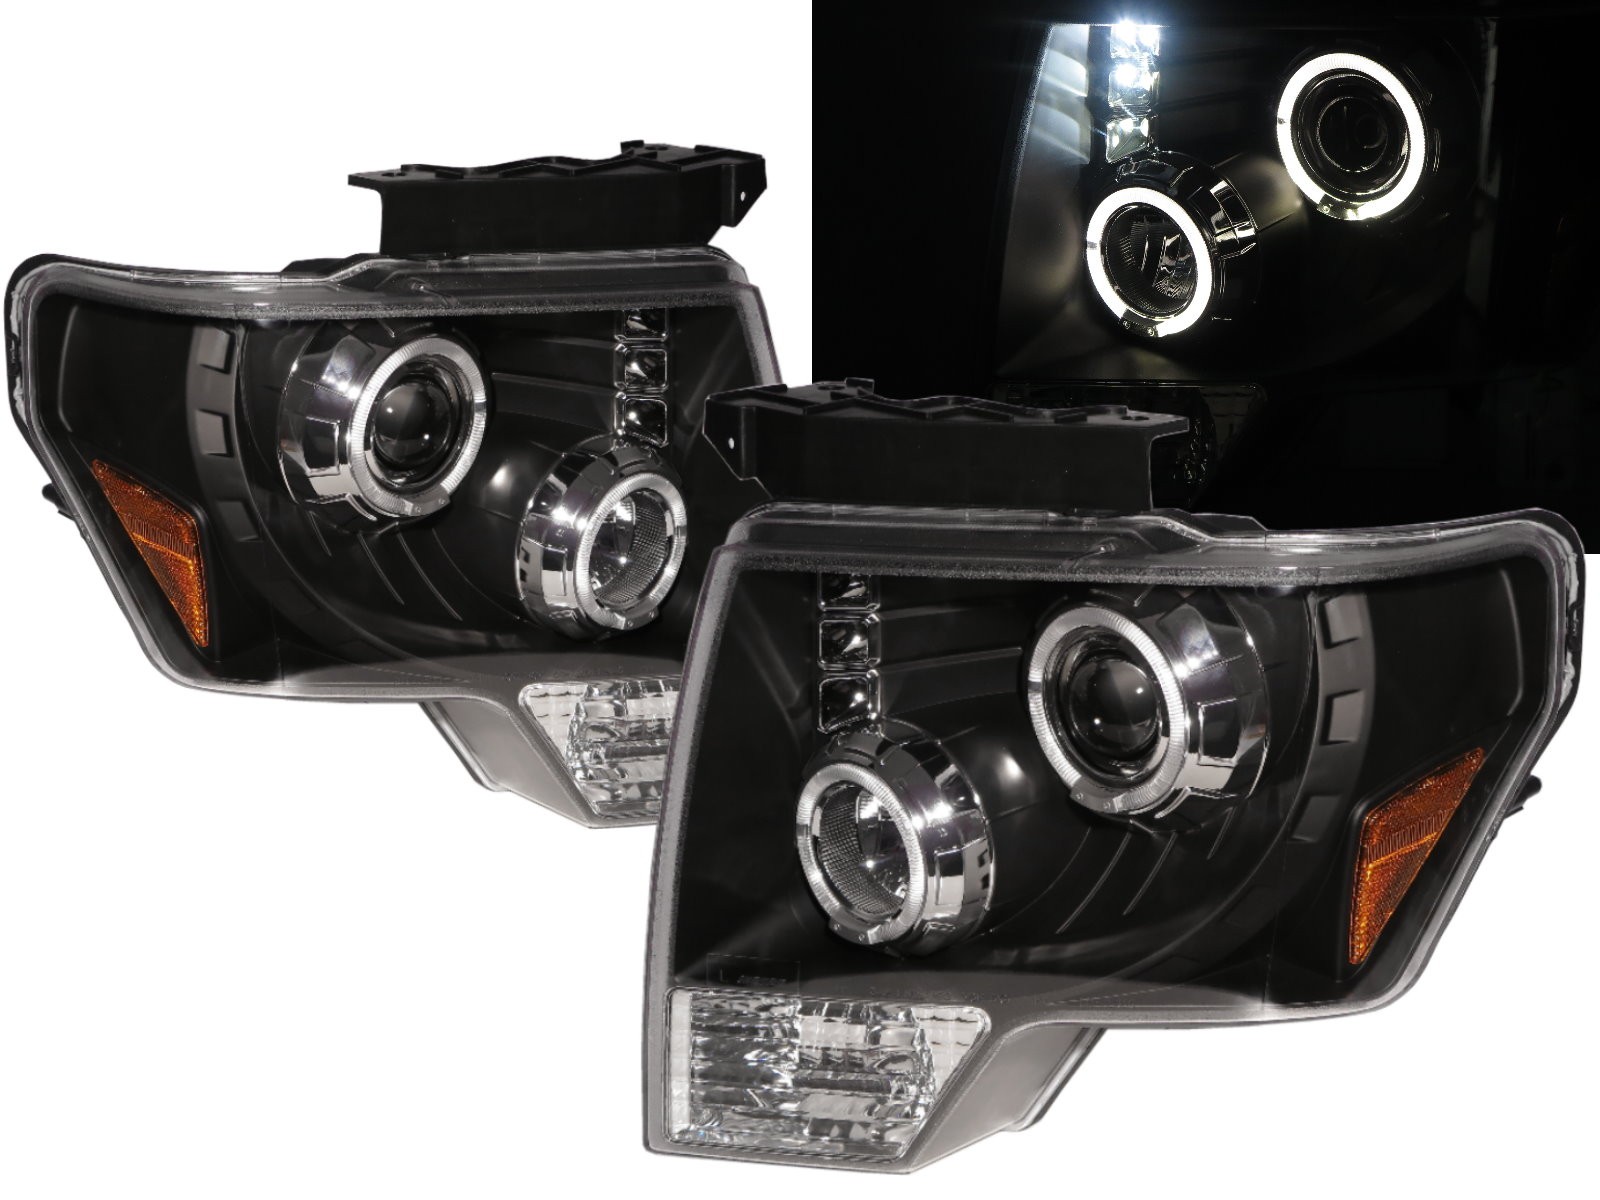 CrazyTheGod F-Series F150 Twelfth generation 2009-2014 Pickup 2D/4D Angel-Eye Projector Headlight Headlamp Black for FORD RHD